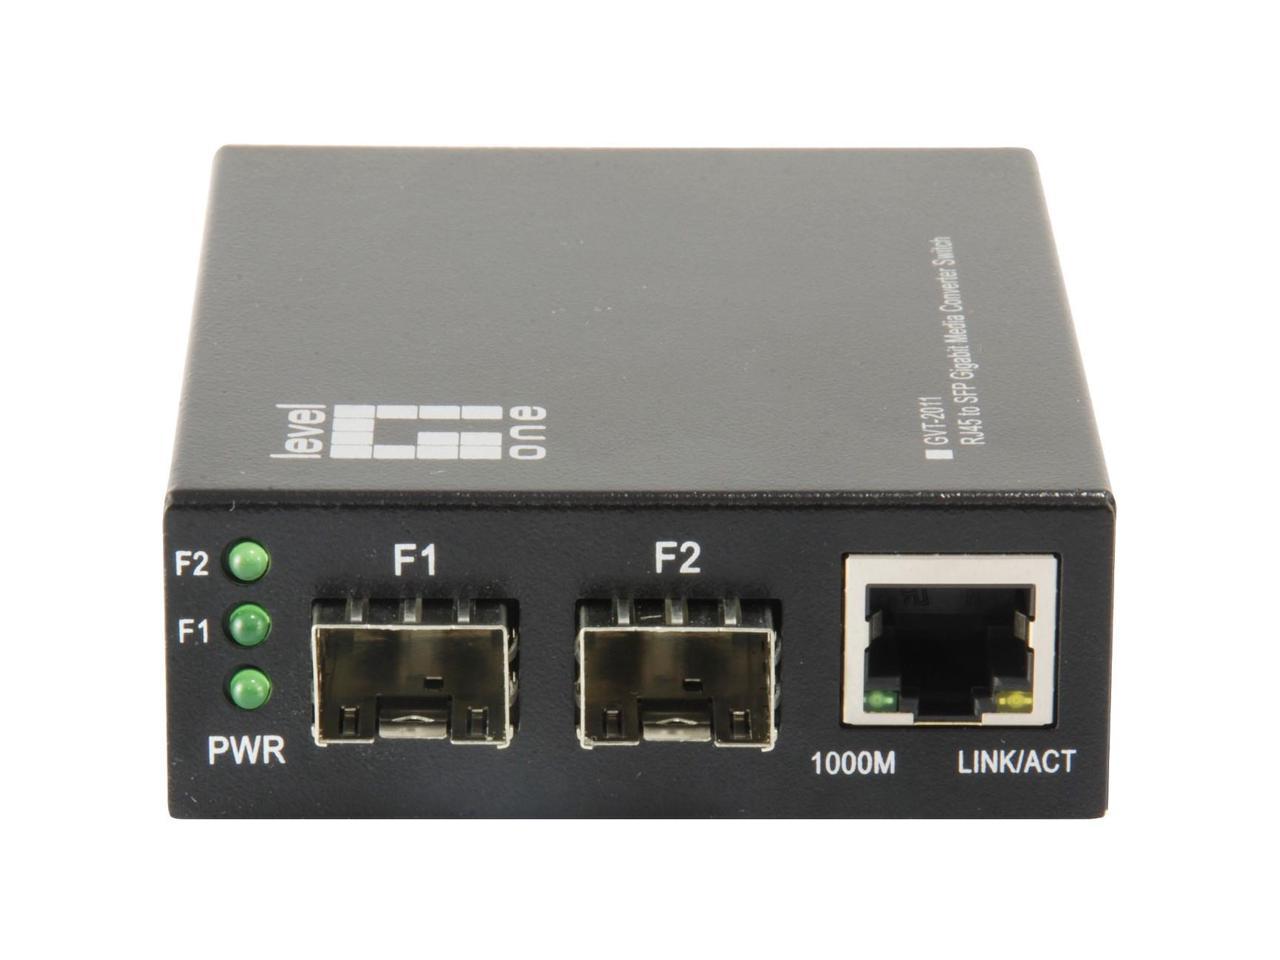 LevelOne RJ45 to SFP Gigabit Media Converter Switch 2 x SFP 1 x RJ45